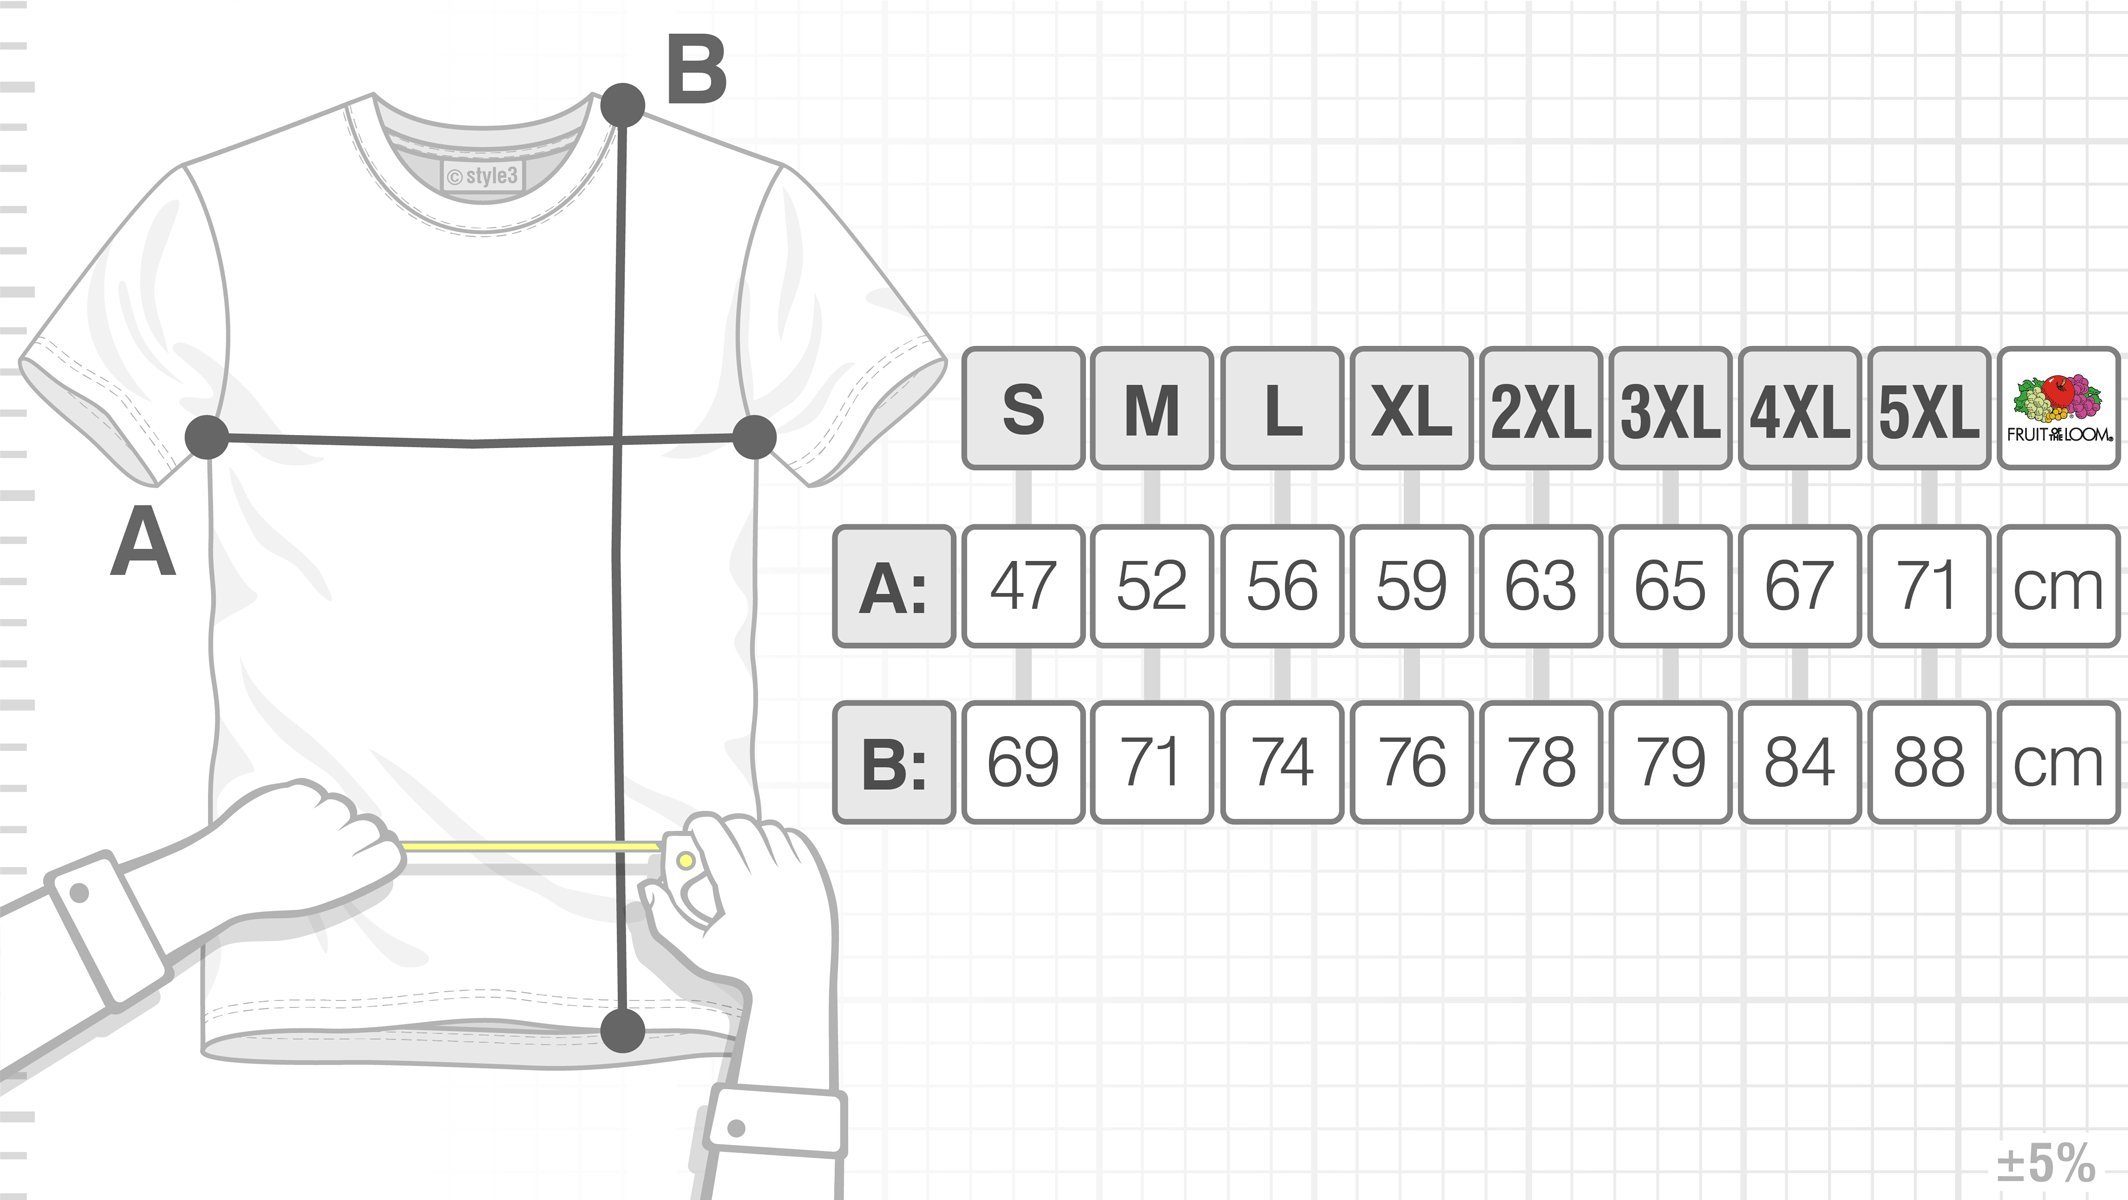 Big Herren T-Shirt schwarz style3 Print-Shirt Theory Würfel Rubik Bang Zauber Sheldon Meltig Cooper Cubes